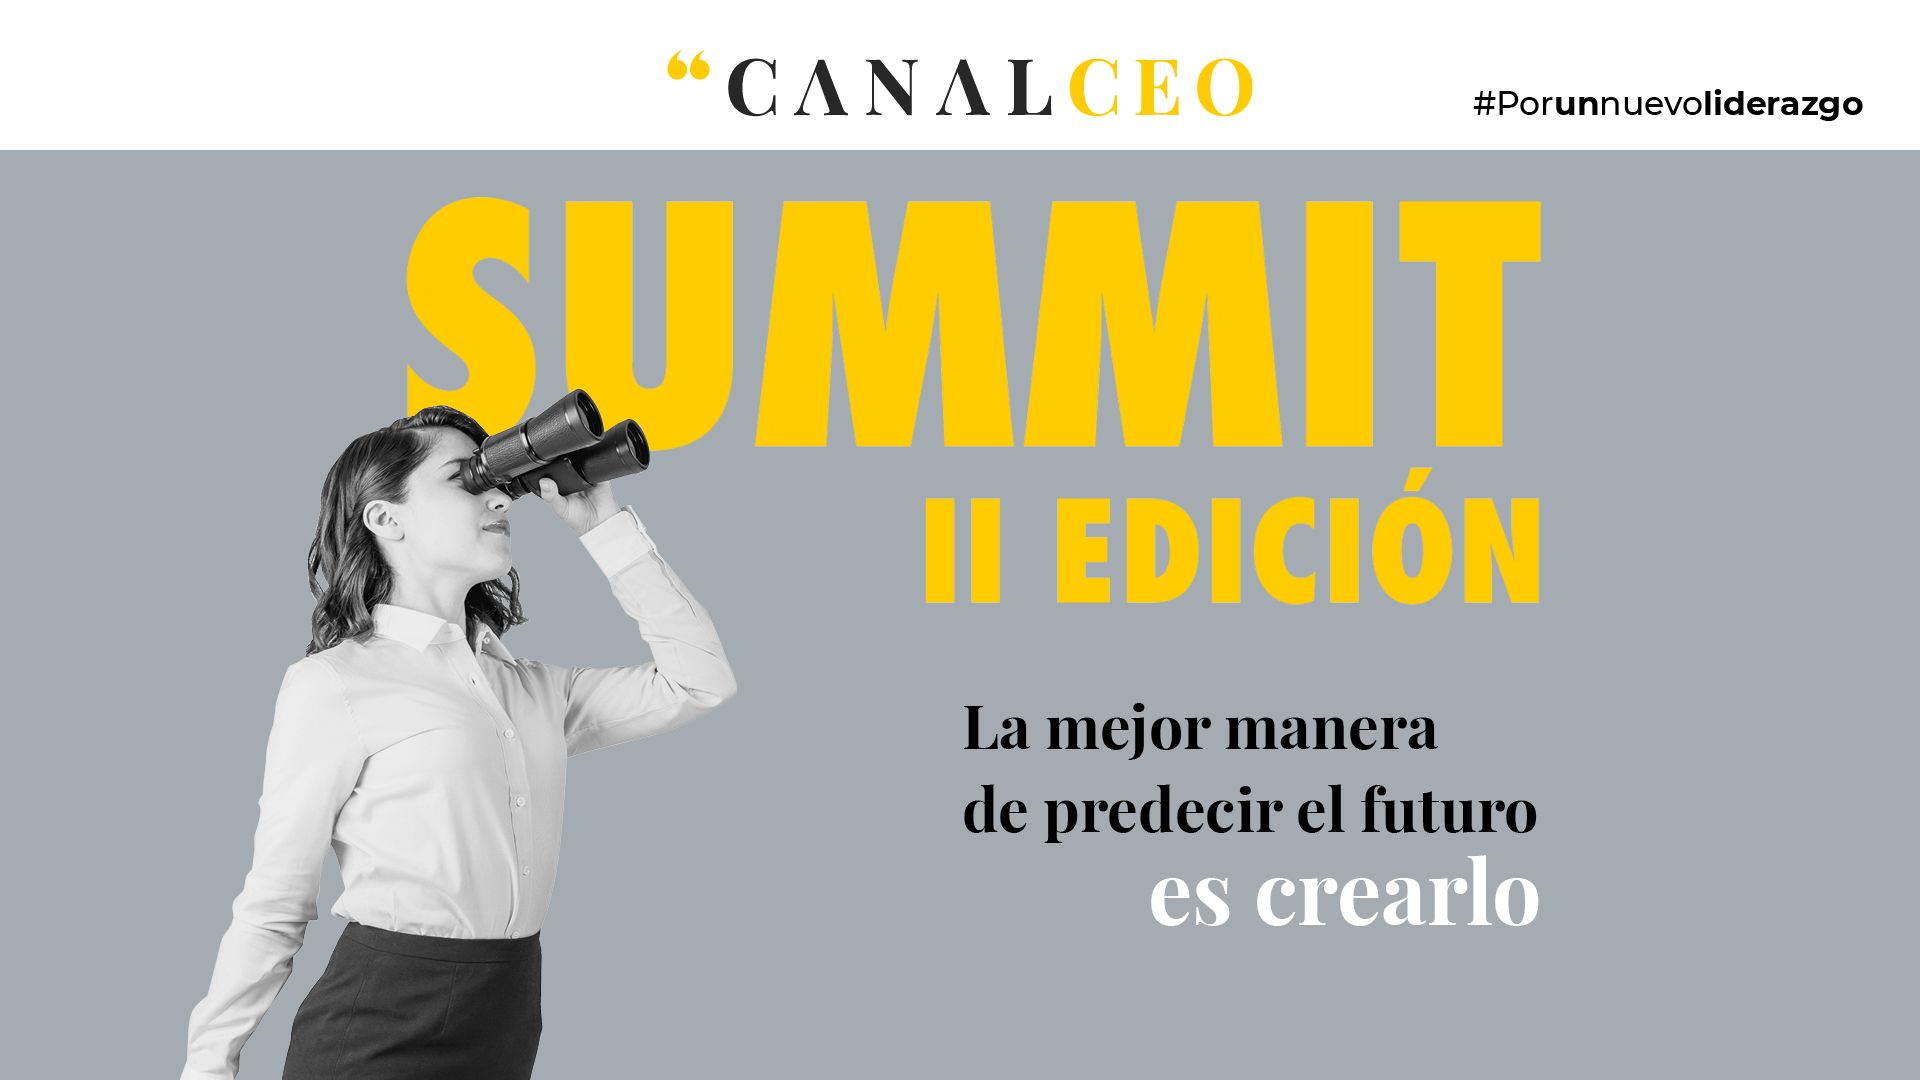 Fotografia Summit Canal CEO